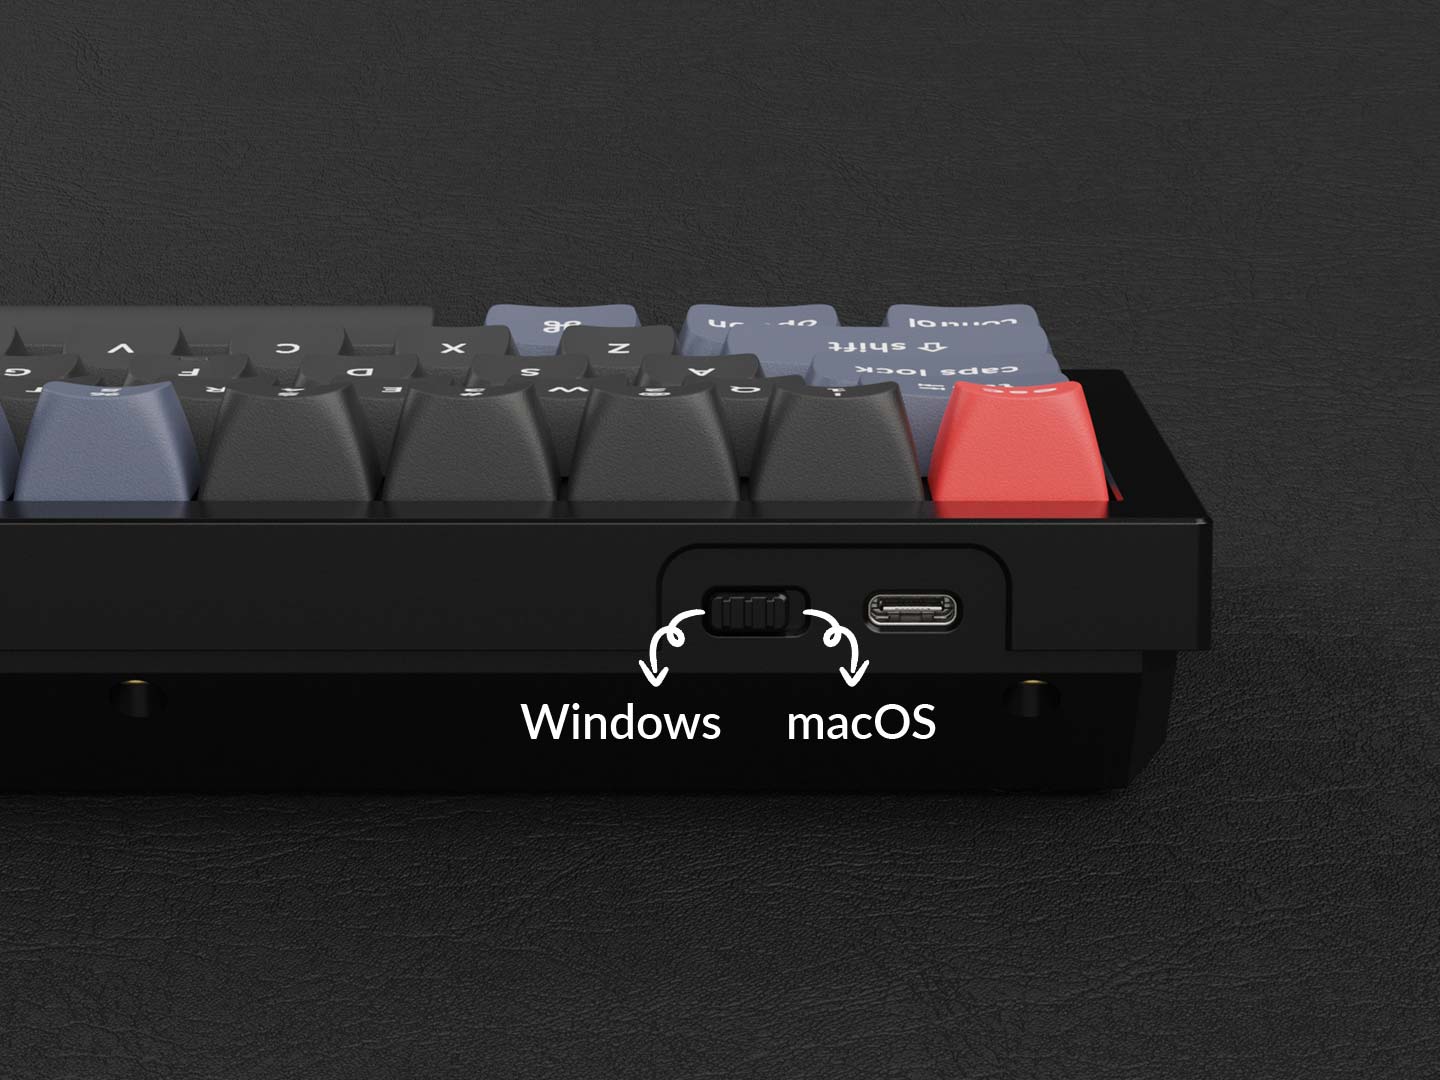 Keychron Q4 - QMK Compatible 60% Barebones Keyboard Kit